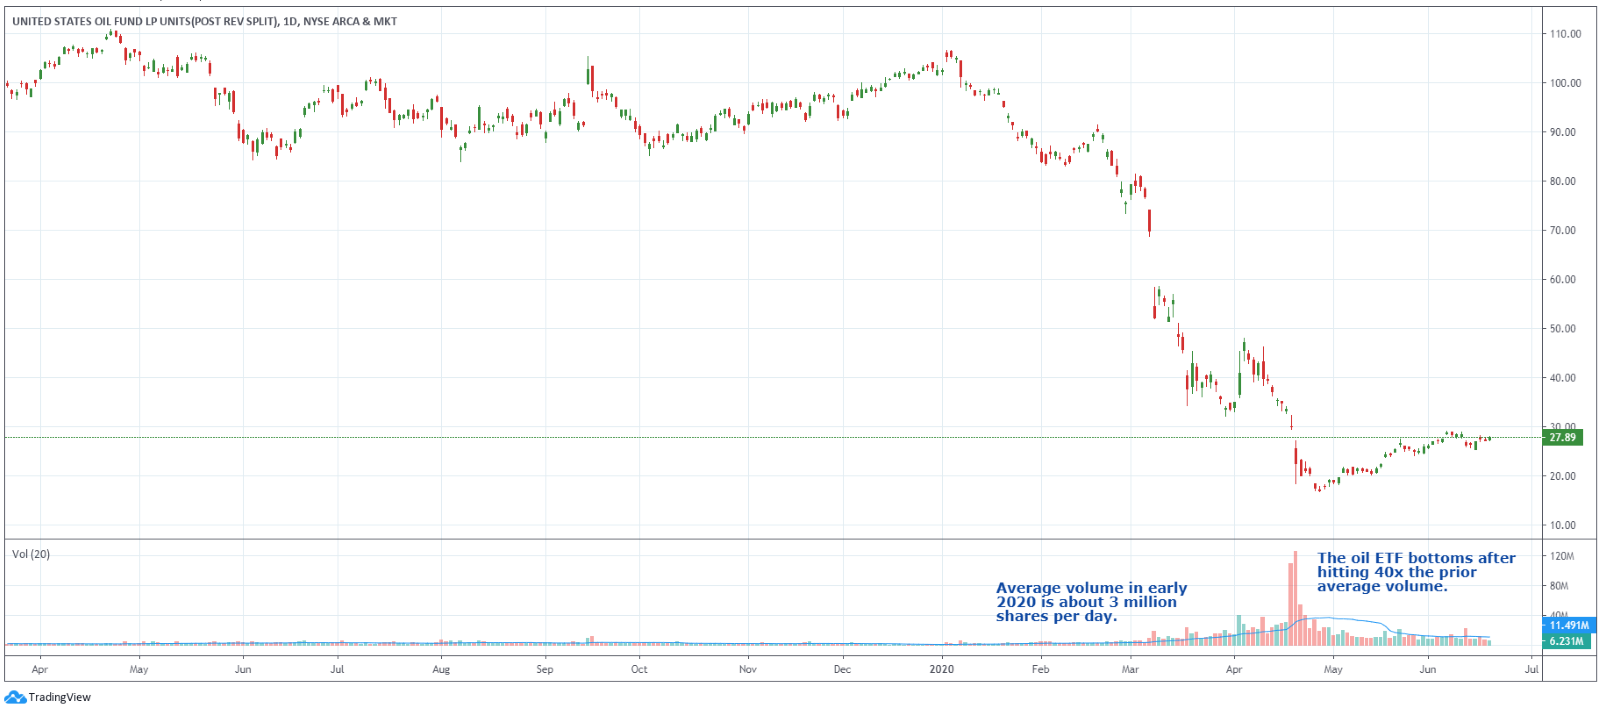 USO ETF price reversal on massive volume spike